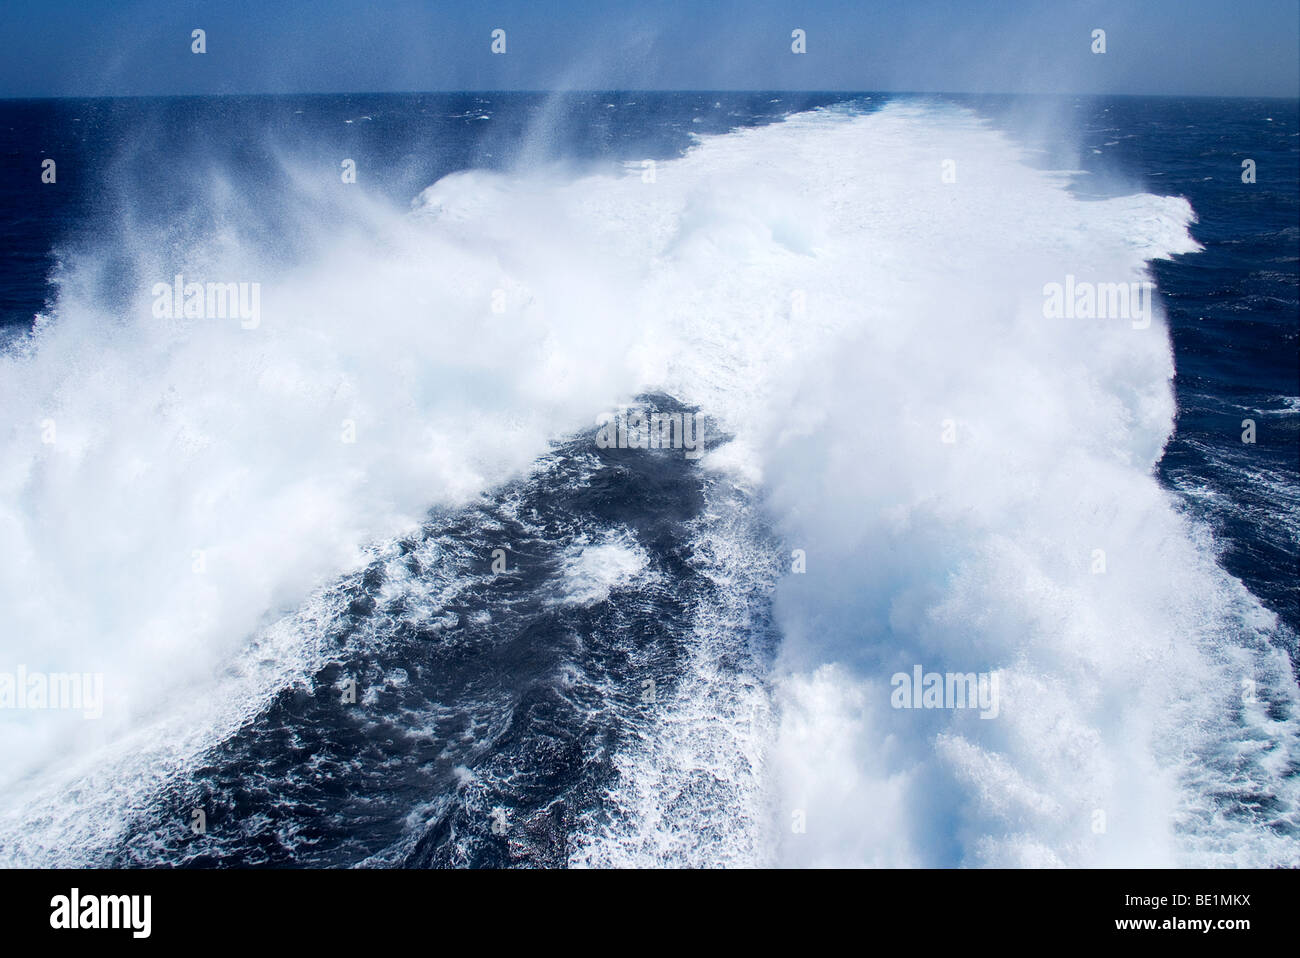 Wake of a catamaran boat Stock Photo